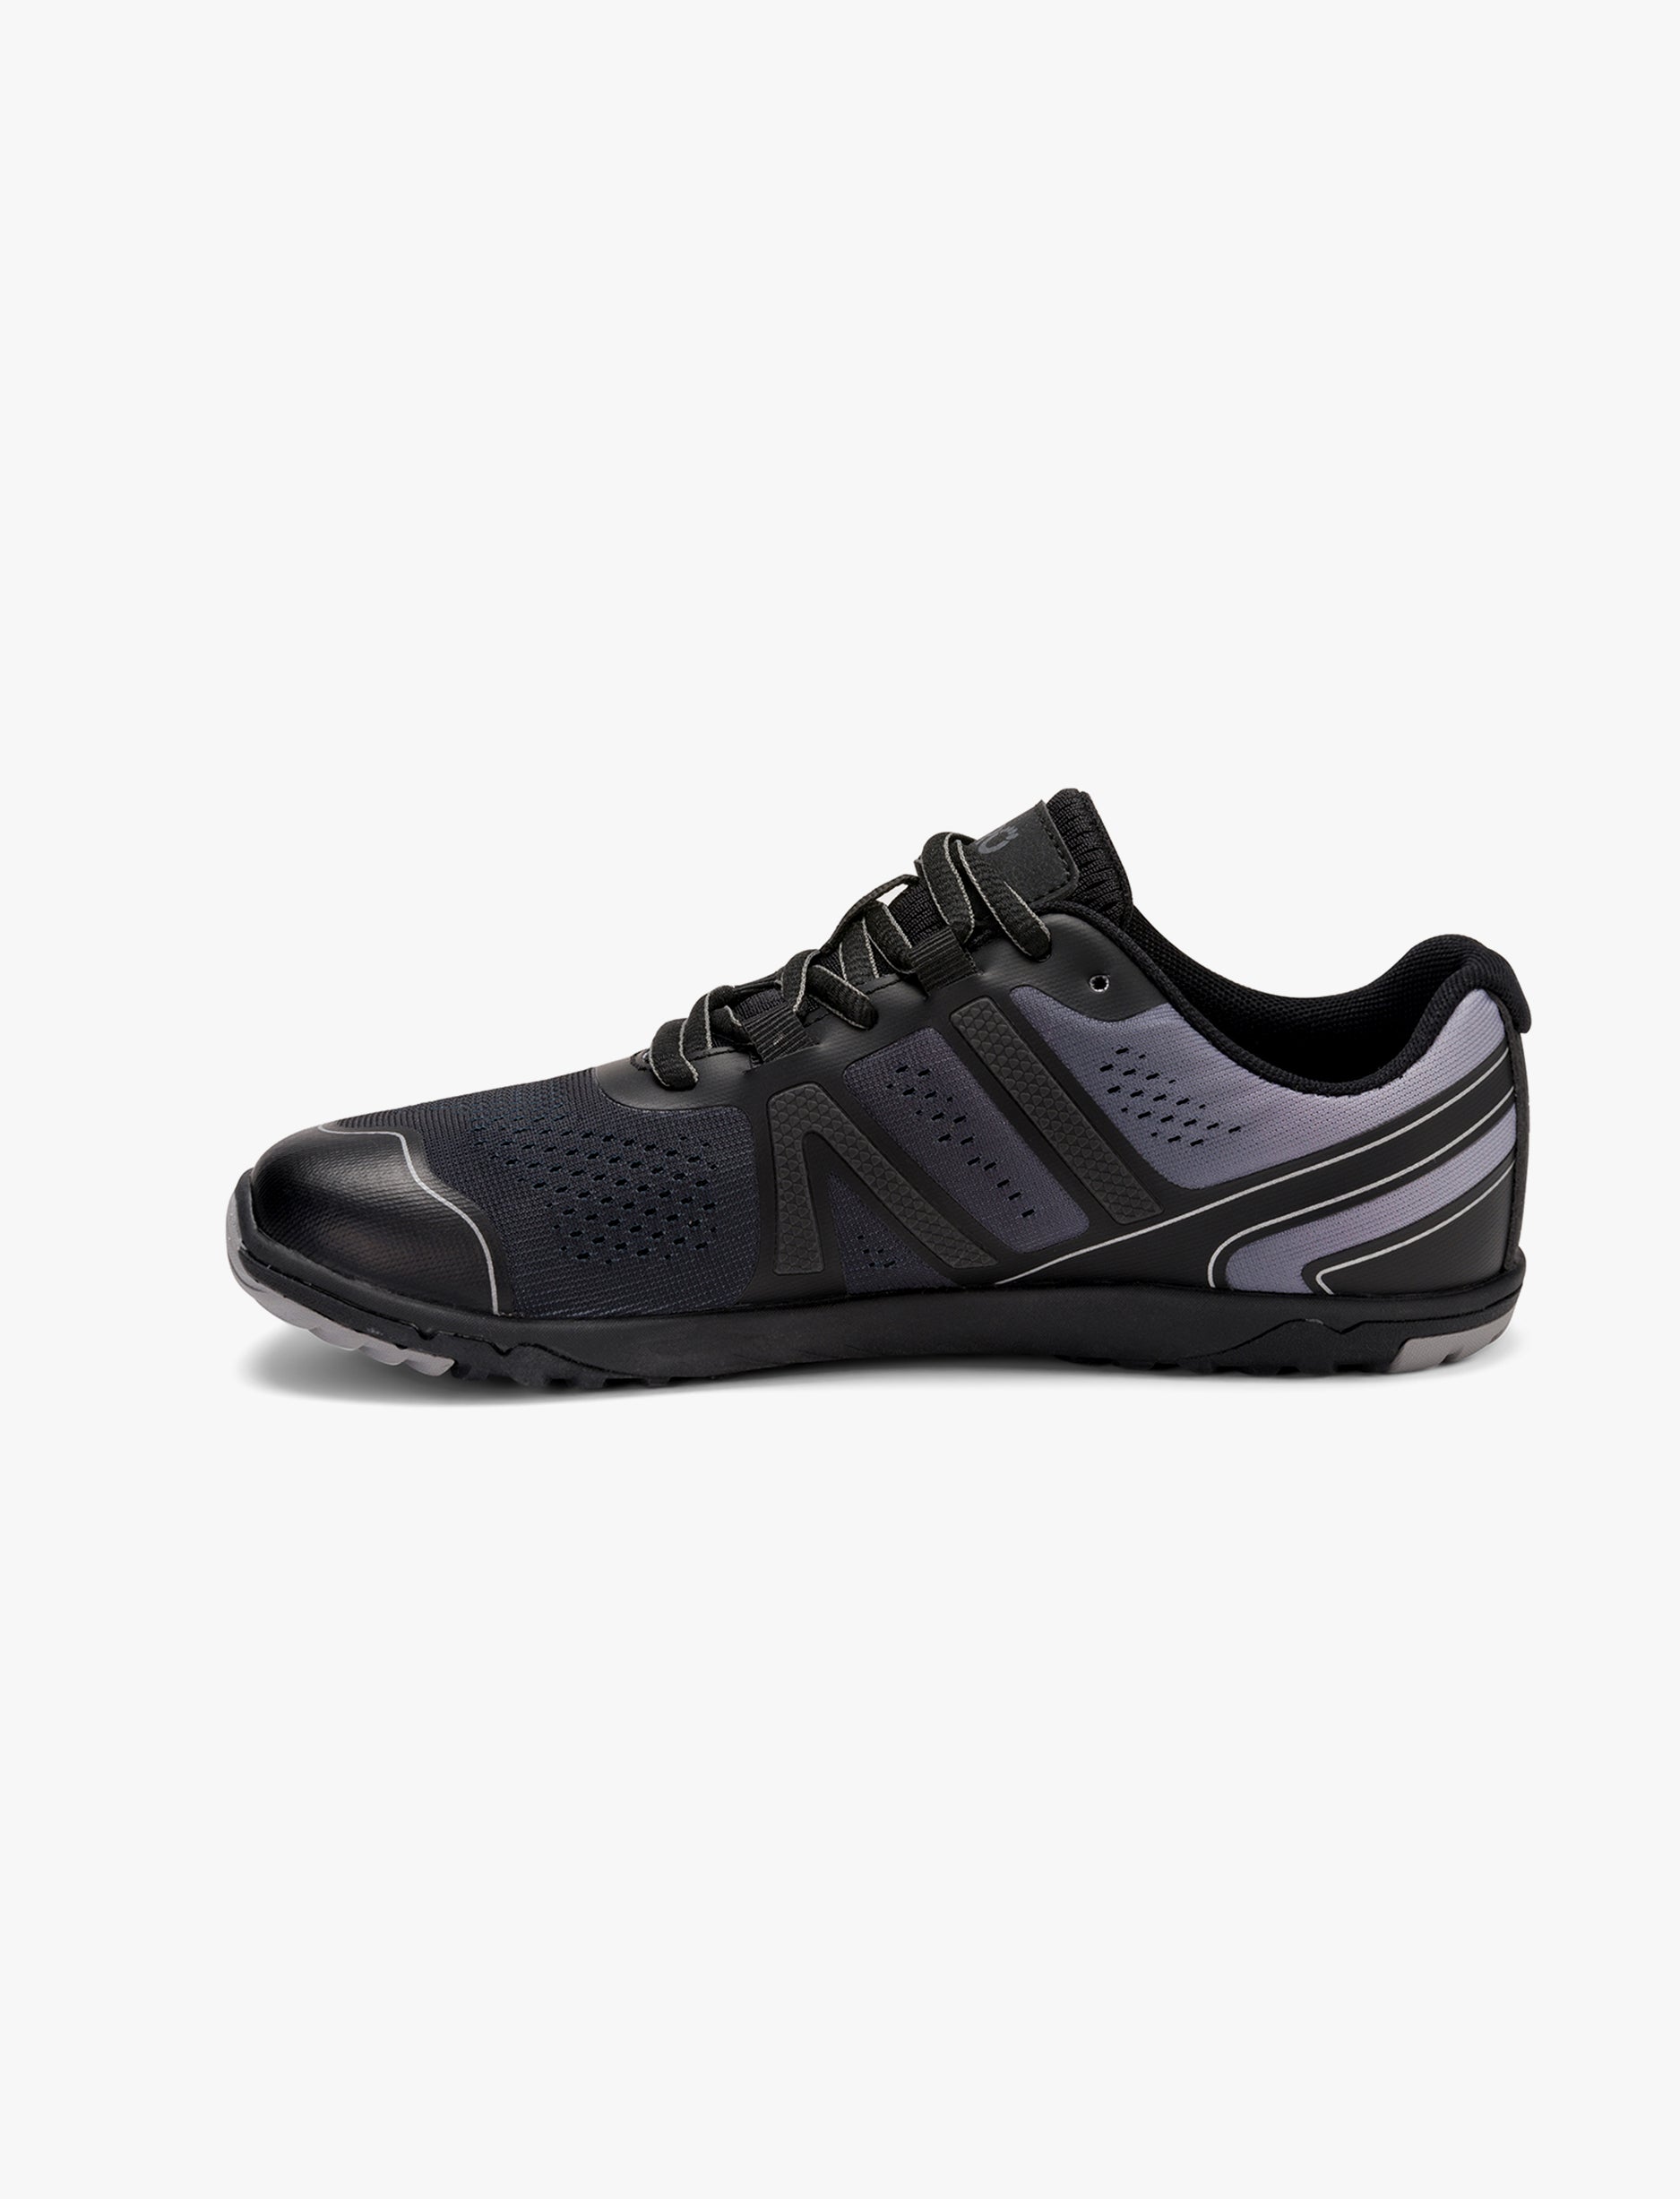 Xero HFS II Women - נעלי ריצה לנשים זרו בצבע שחור/אפור